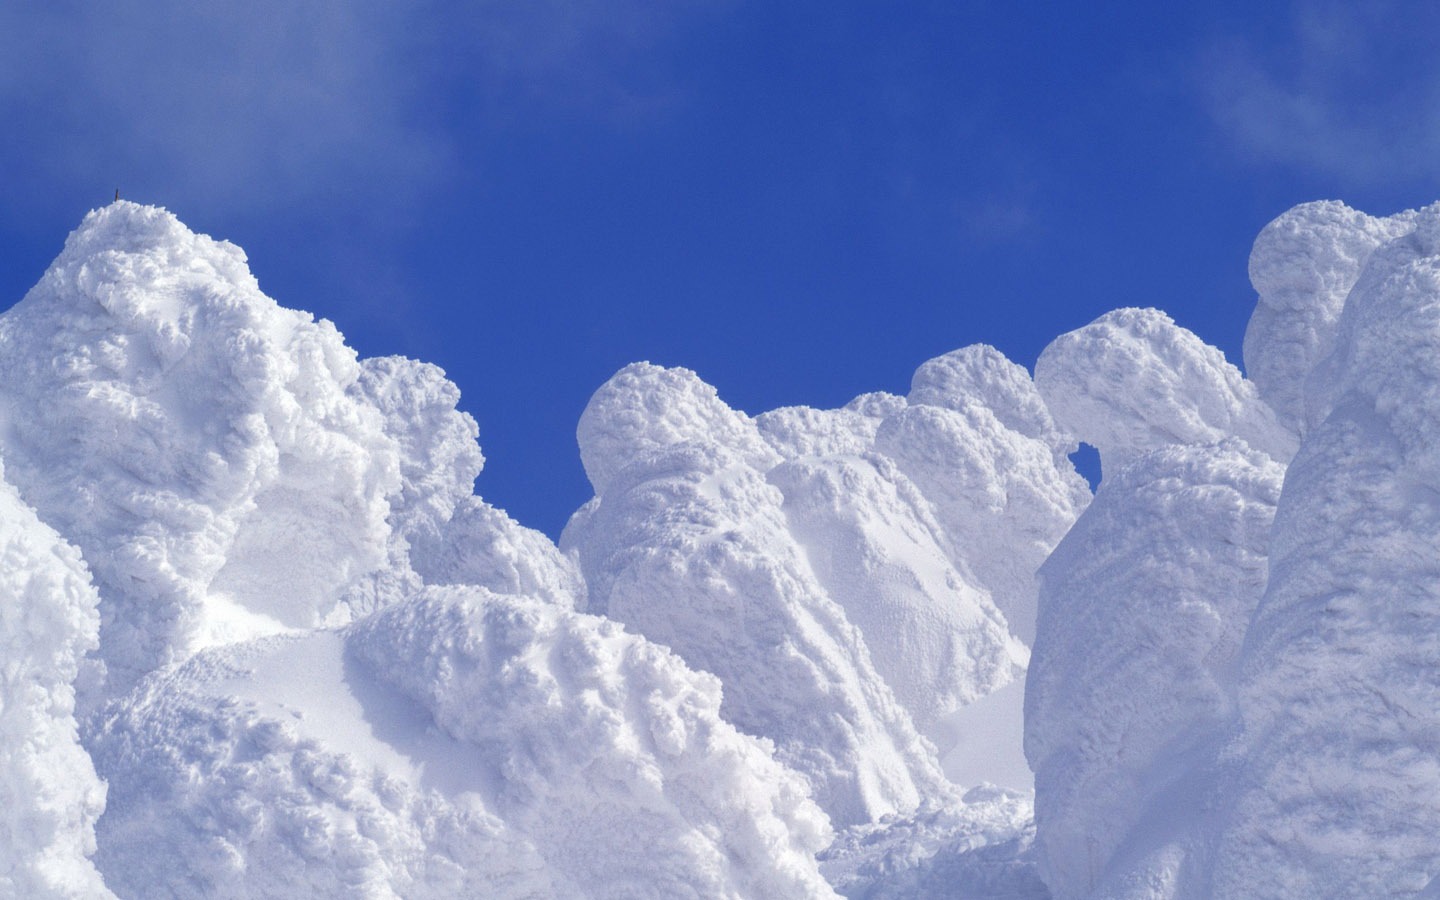 HD wallpaper cool winter snow scene #19 - 1440x900